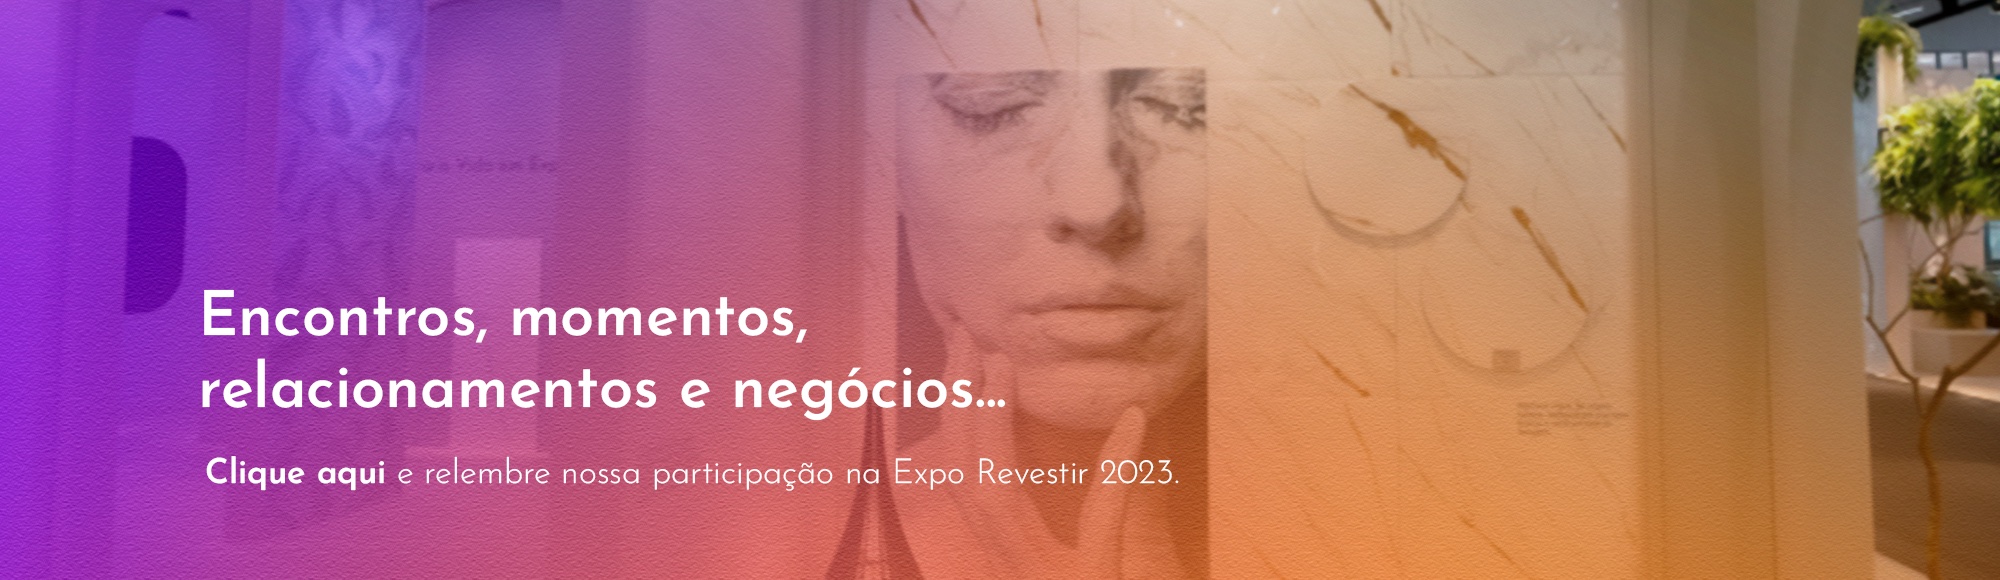    Expo Revestir 2023